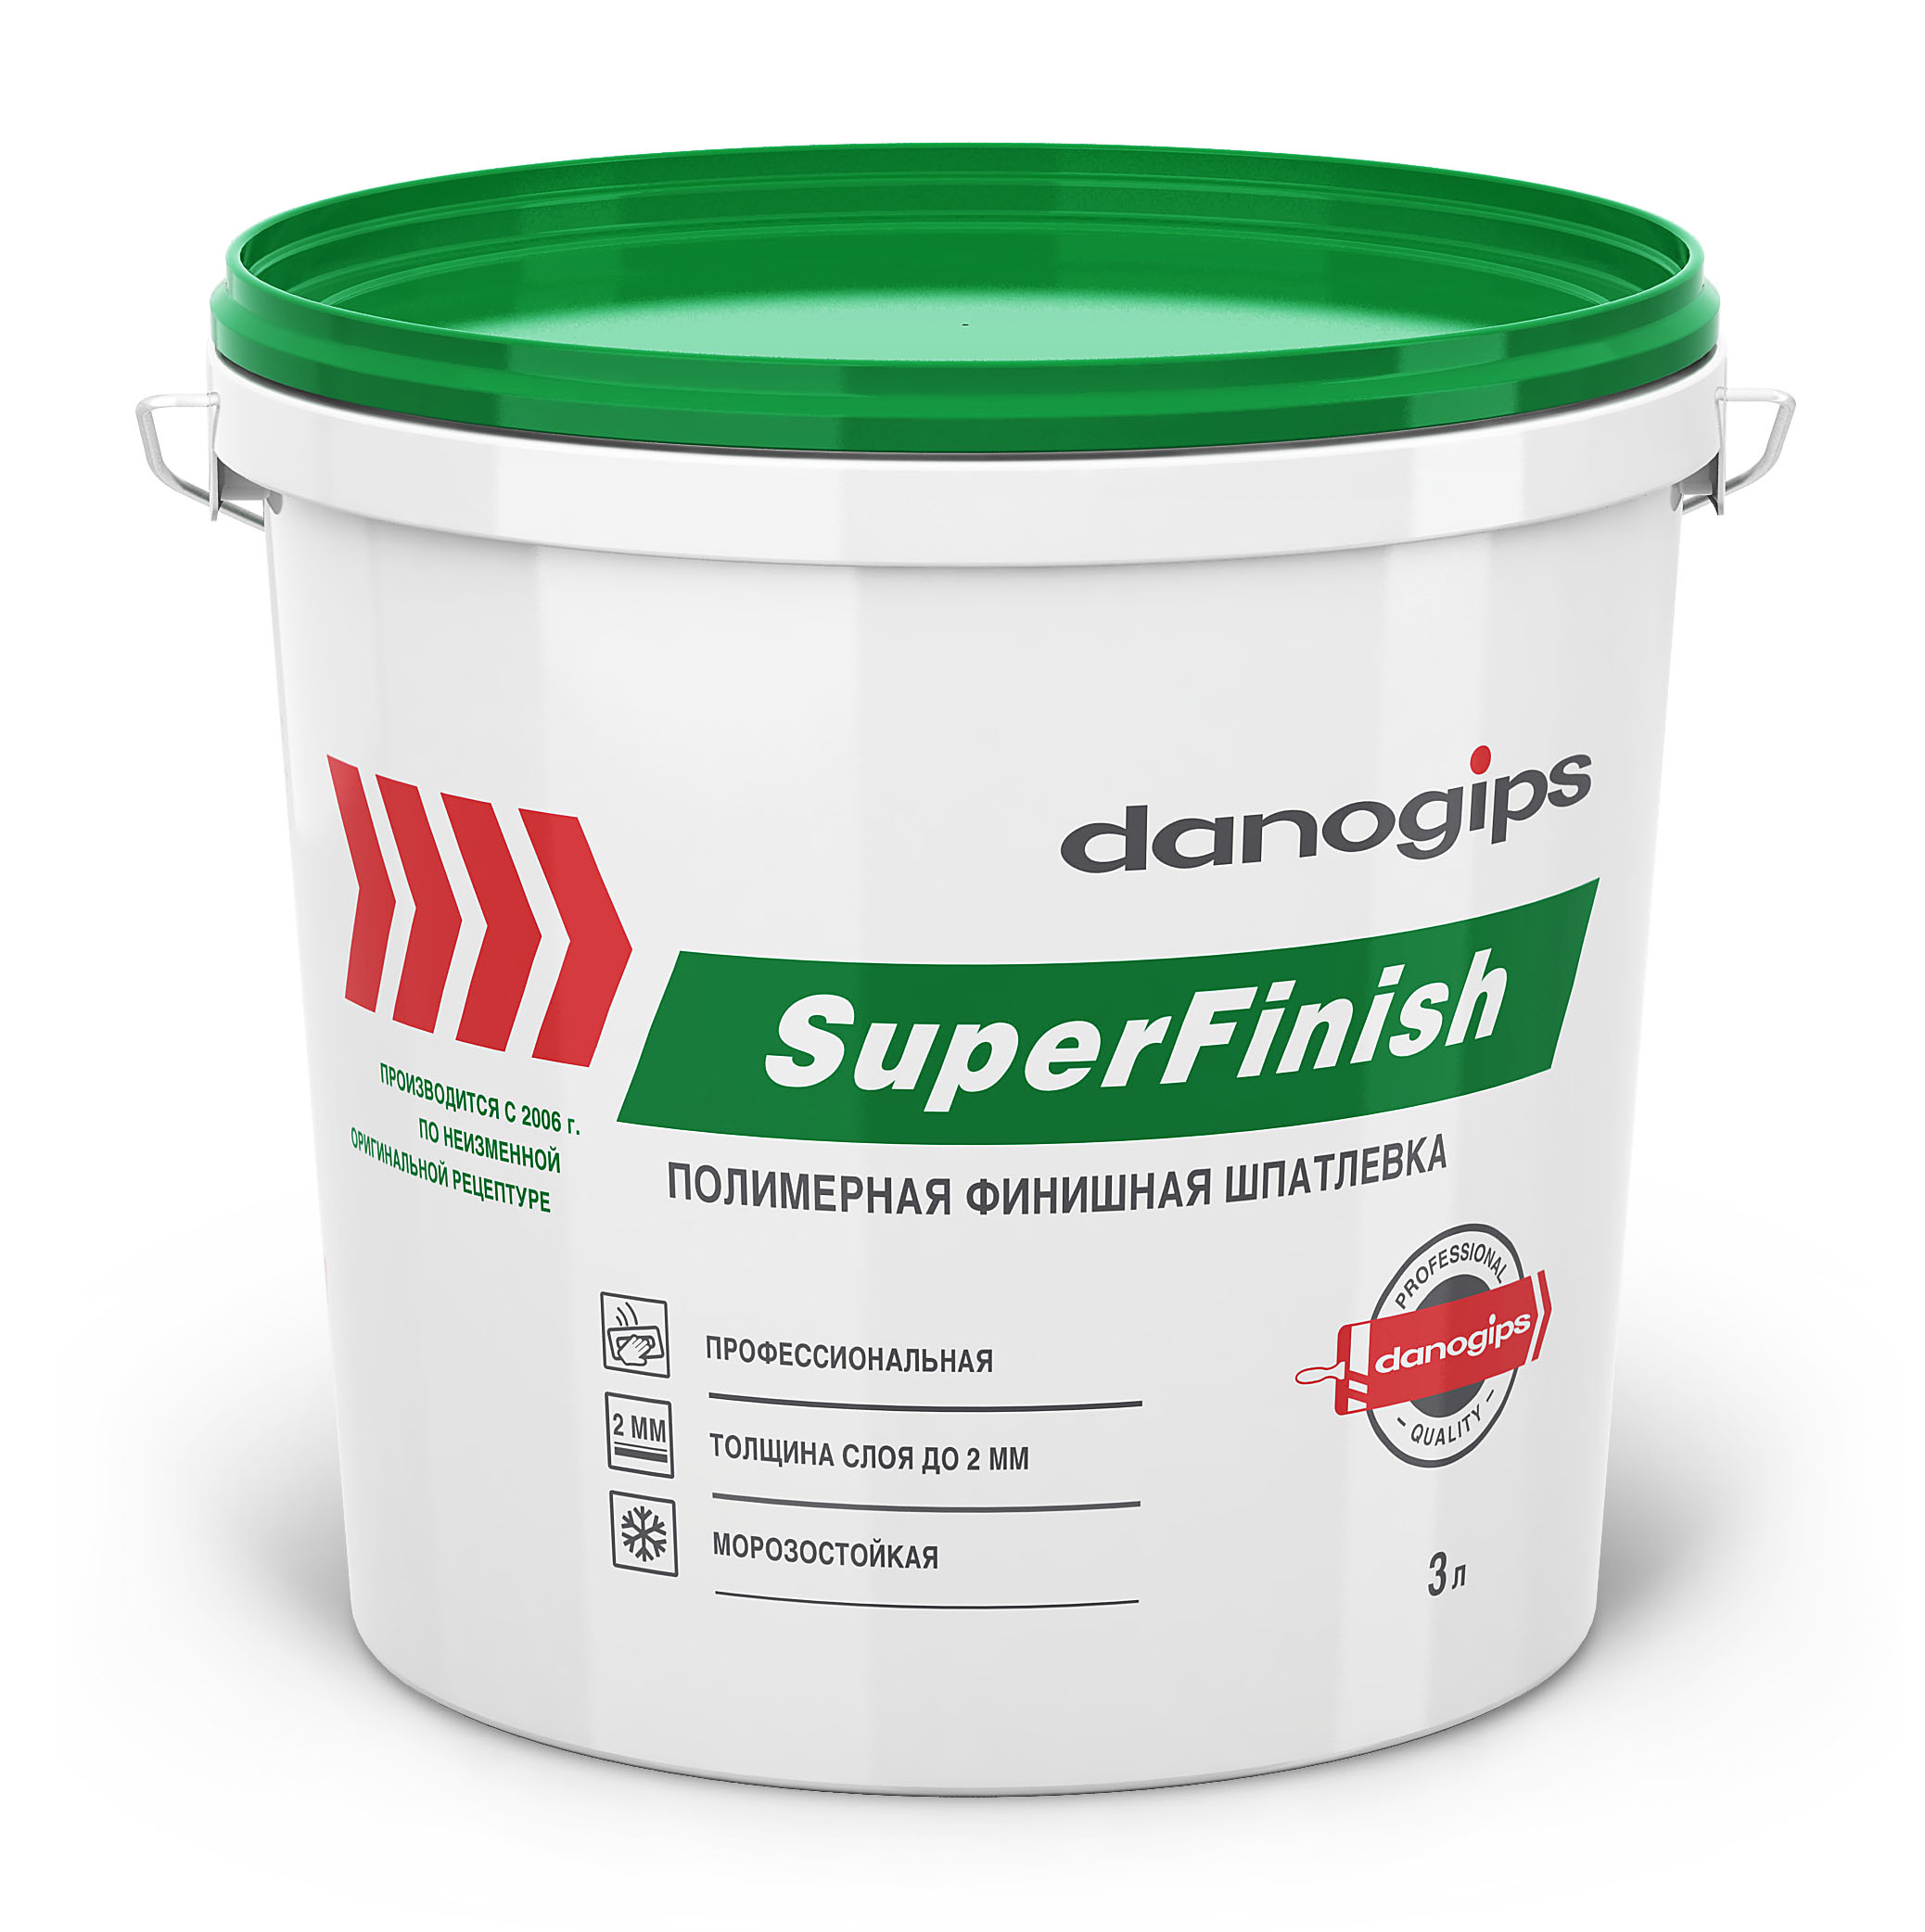 Шпатлевка SuperFinish (Sheetrock) готовая, финишная, 5,6кг, 3л, зеленая крышка, DANOGIPS